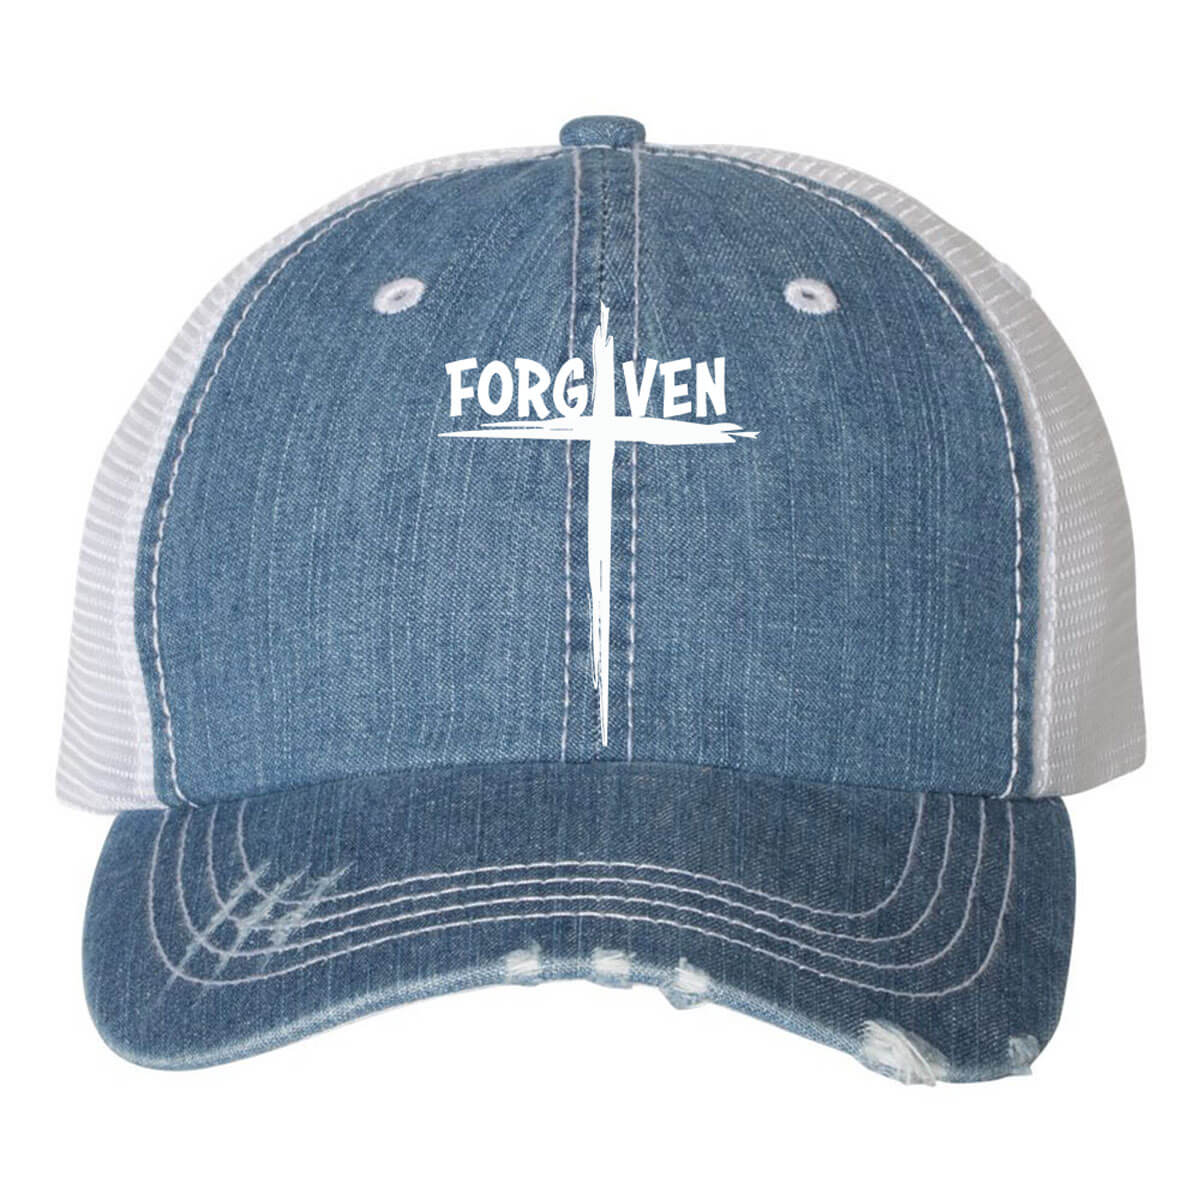 Forgiven Cross Embroidered Trucker Cap